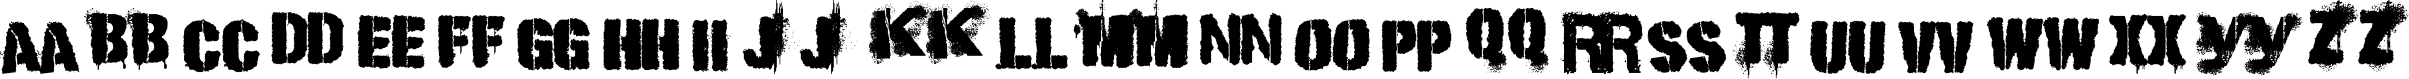 Пример написания английского алфавита шрифтом NewUnicodeFont